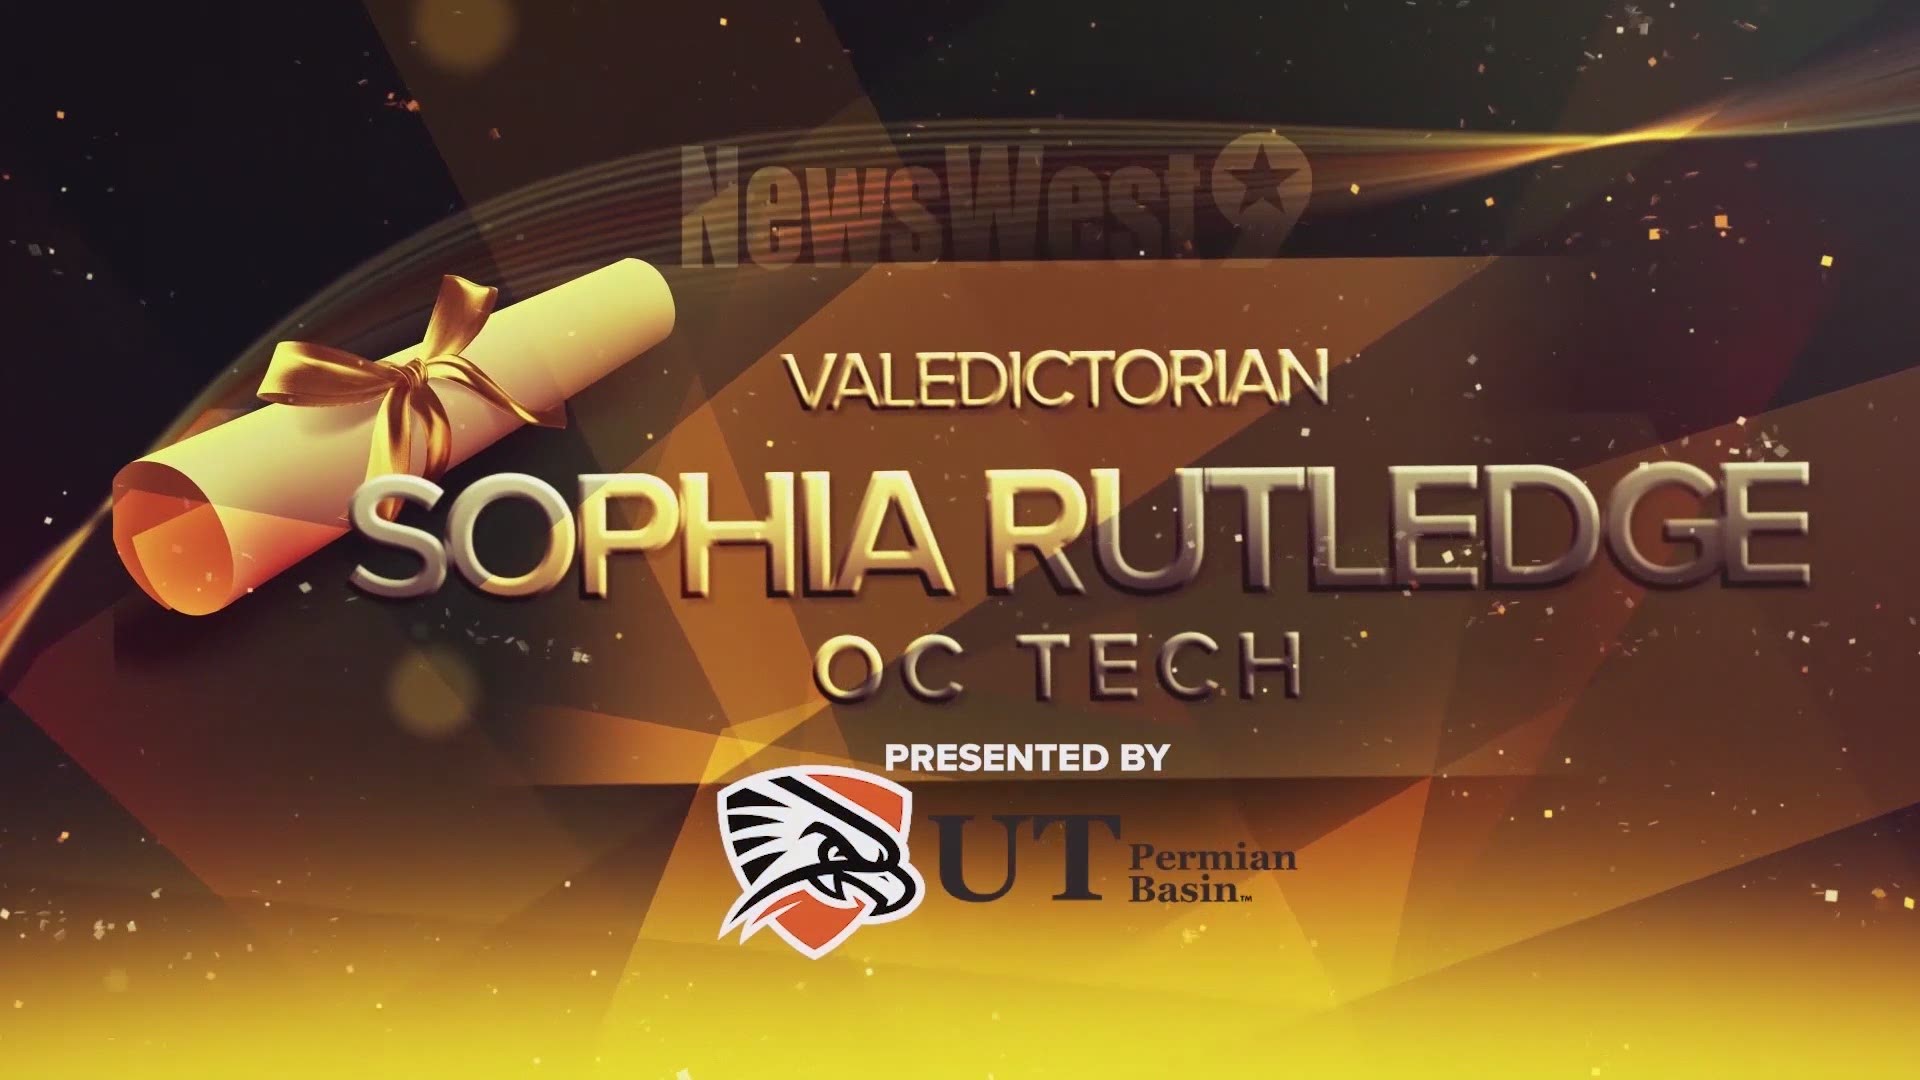 Sophia Rutledge delivers the valedictorian speech for  OC Tech